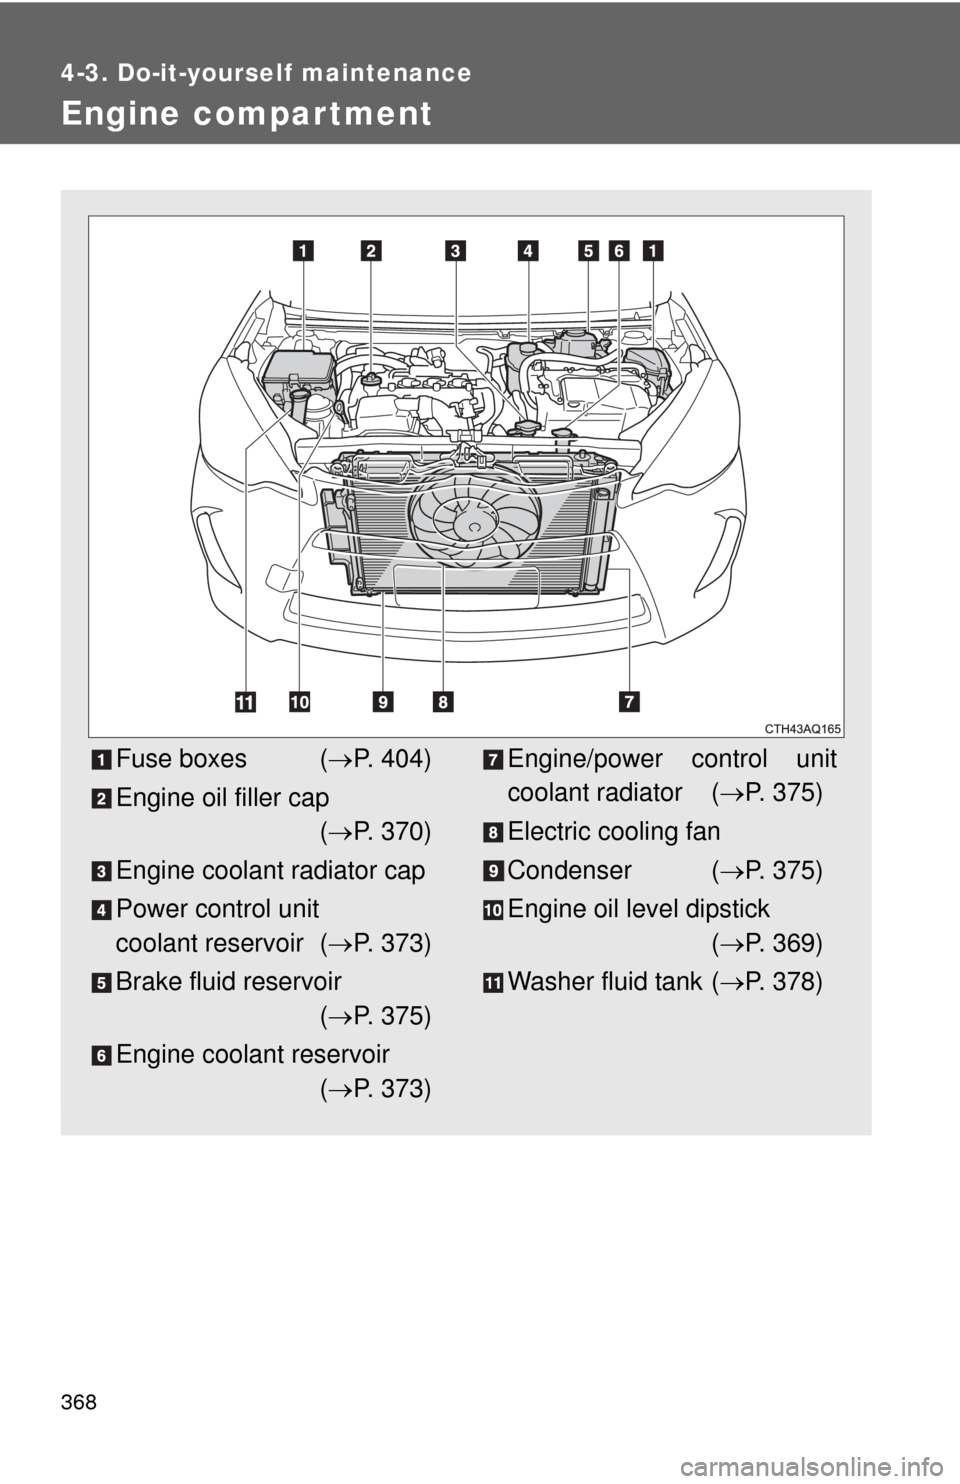 TOYOTA PRIUS C 2014 NHP10 / 1.G Owners Manual 368
4-3. Do-it-yourself maintenance
Engine compar tment
Fuse boxes (P. 404)
Engine oil filler cap ( P. 370)
Engine coolant radiator cap
Power control unit 
coolant reservoir ( P. 373)
Brake f